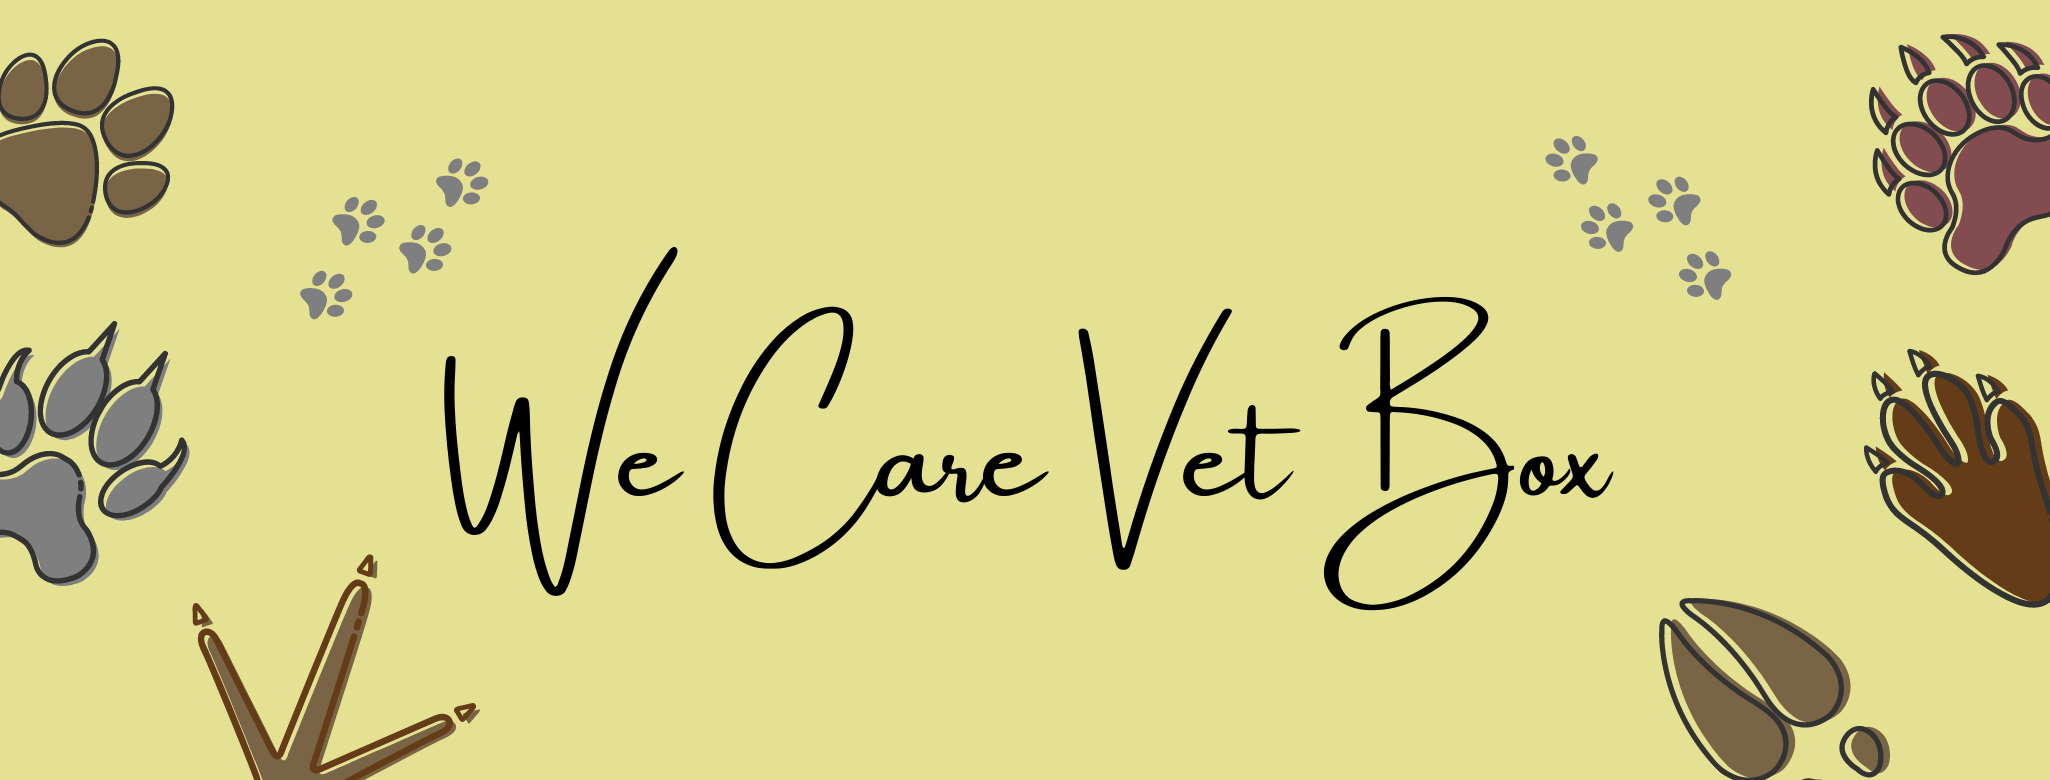 We Care Vet Box